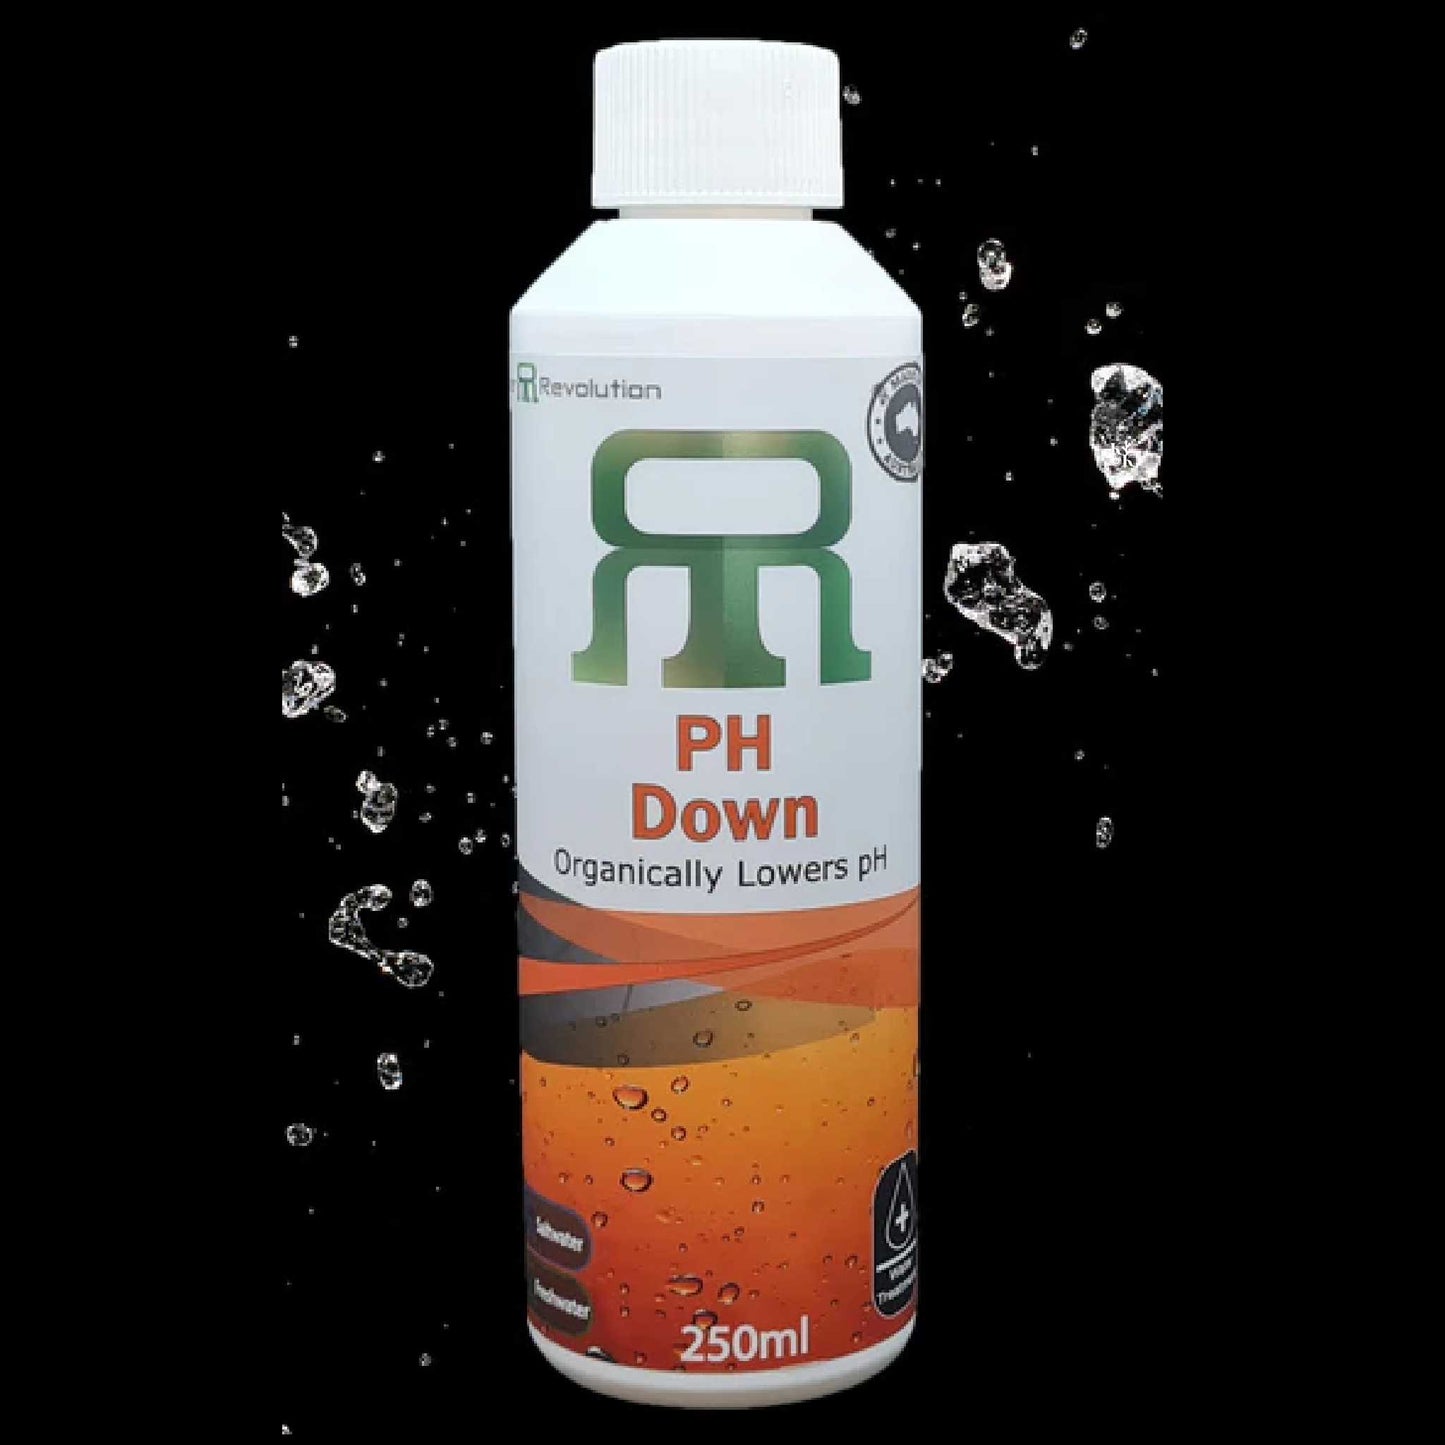 River Revolution pH Down Liquid